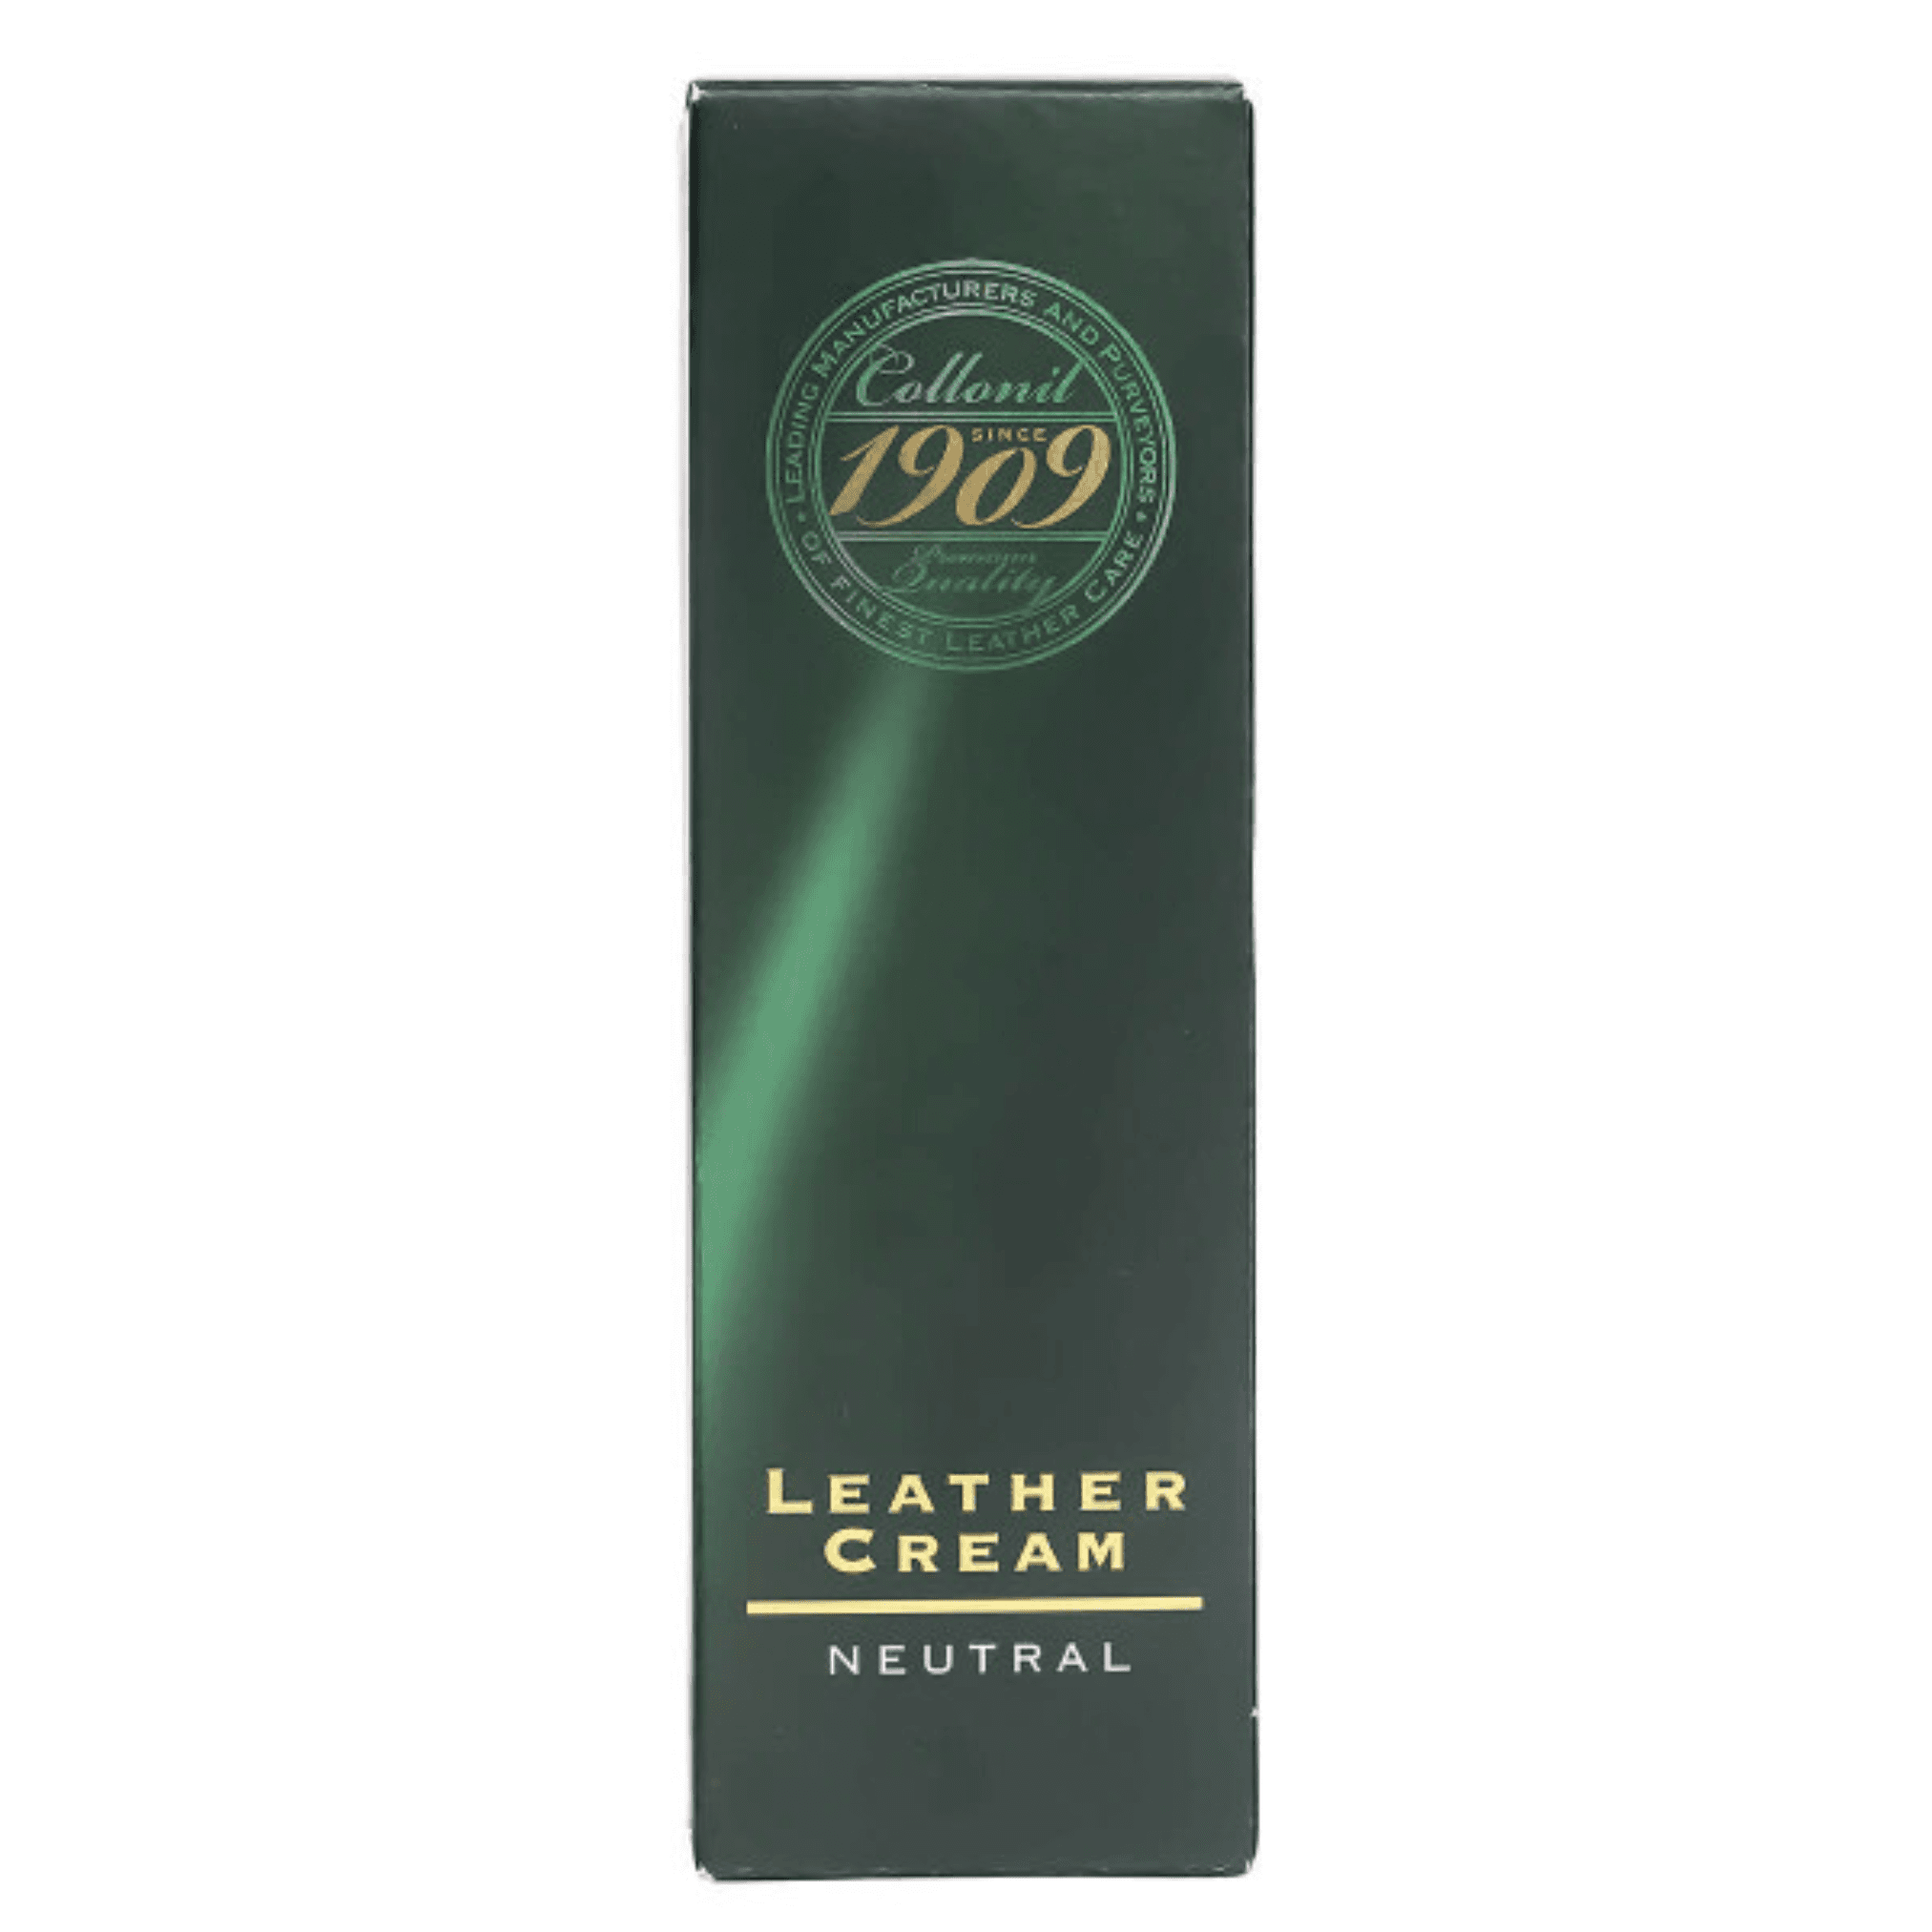 1909 Leather Cream - Pflege